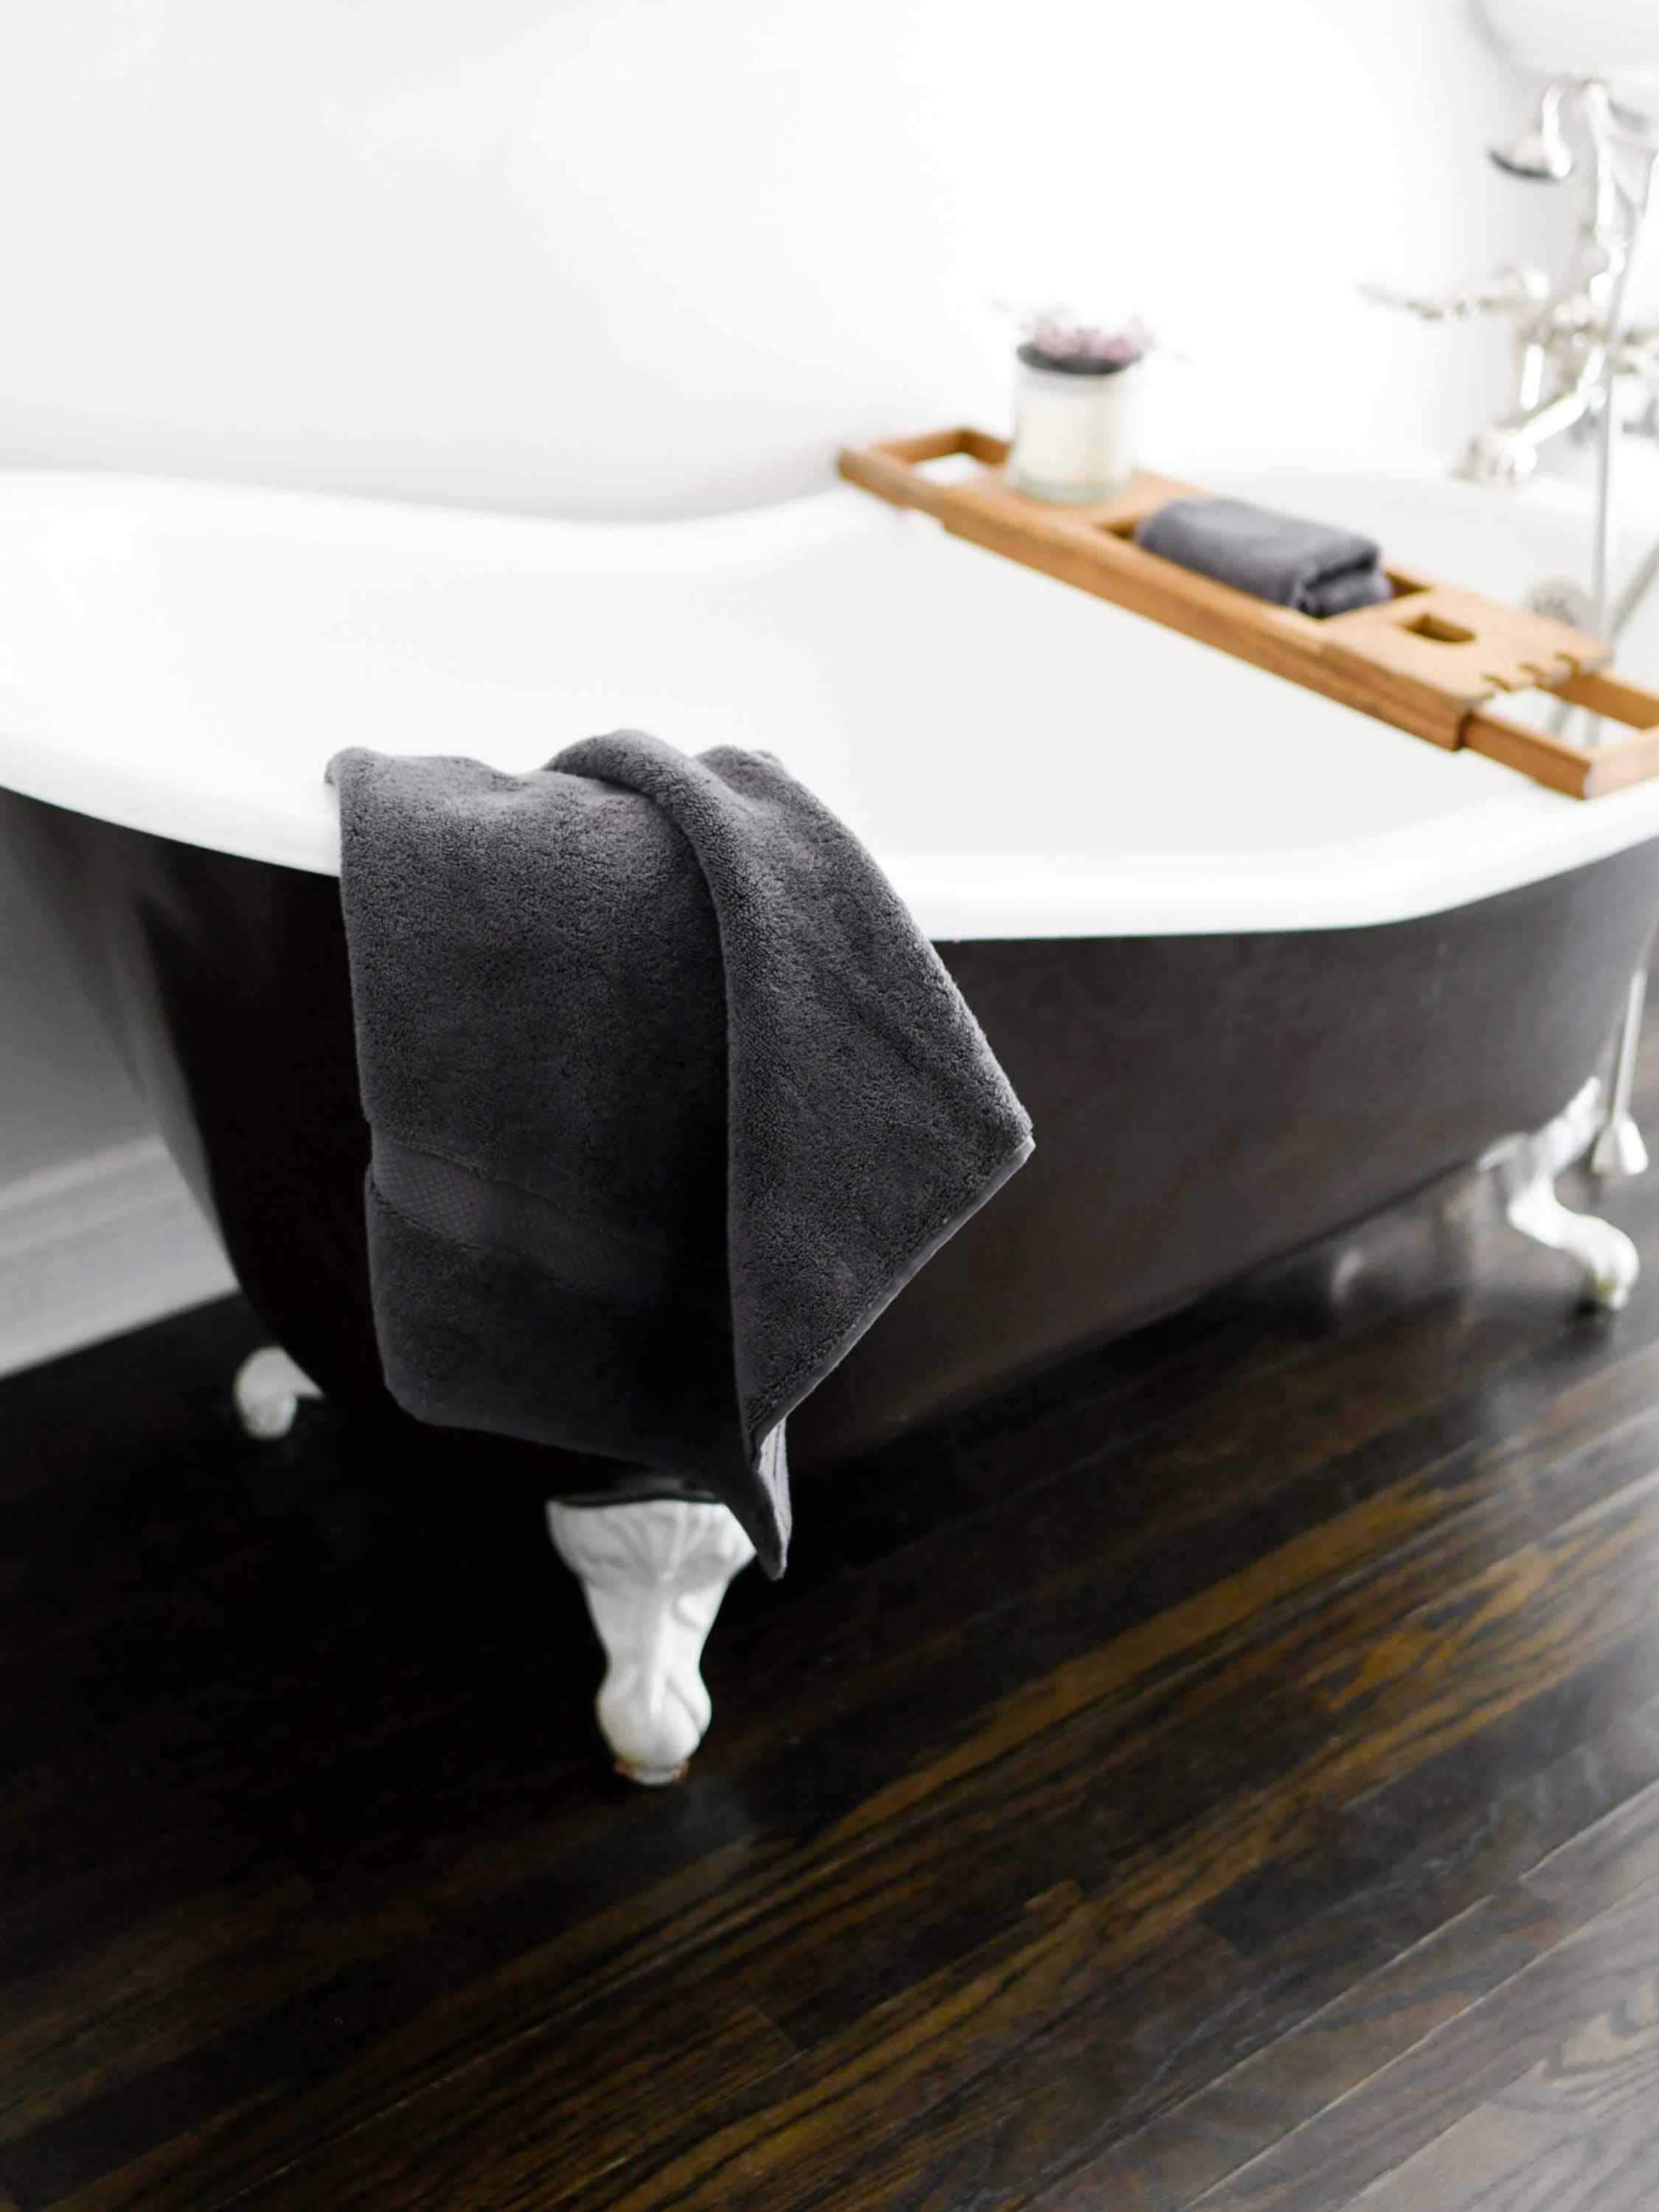 Wamsutta Hygro Duet Bath Towel in Pewter 